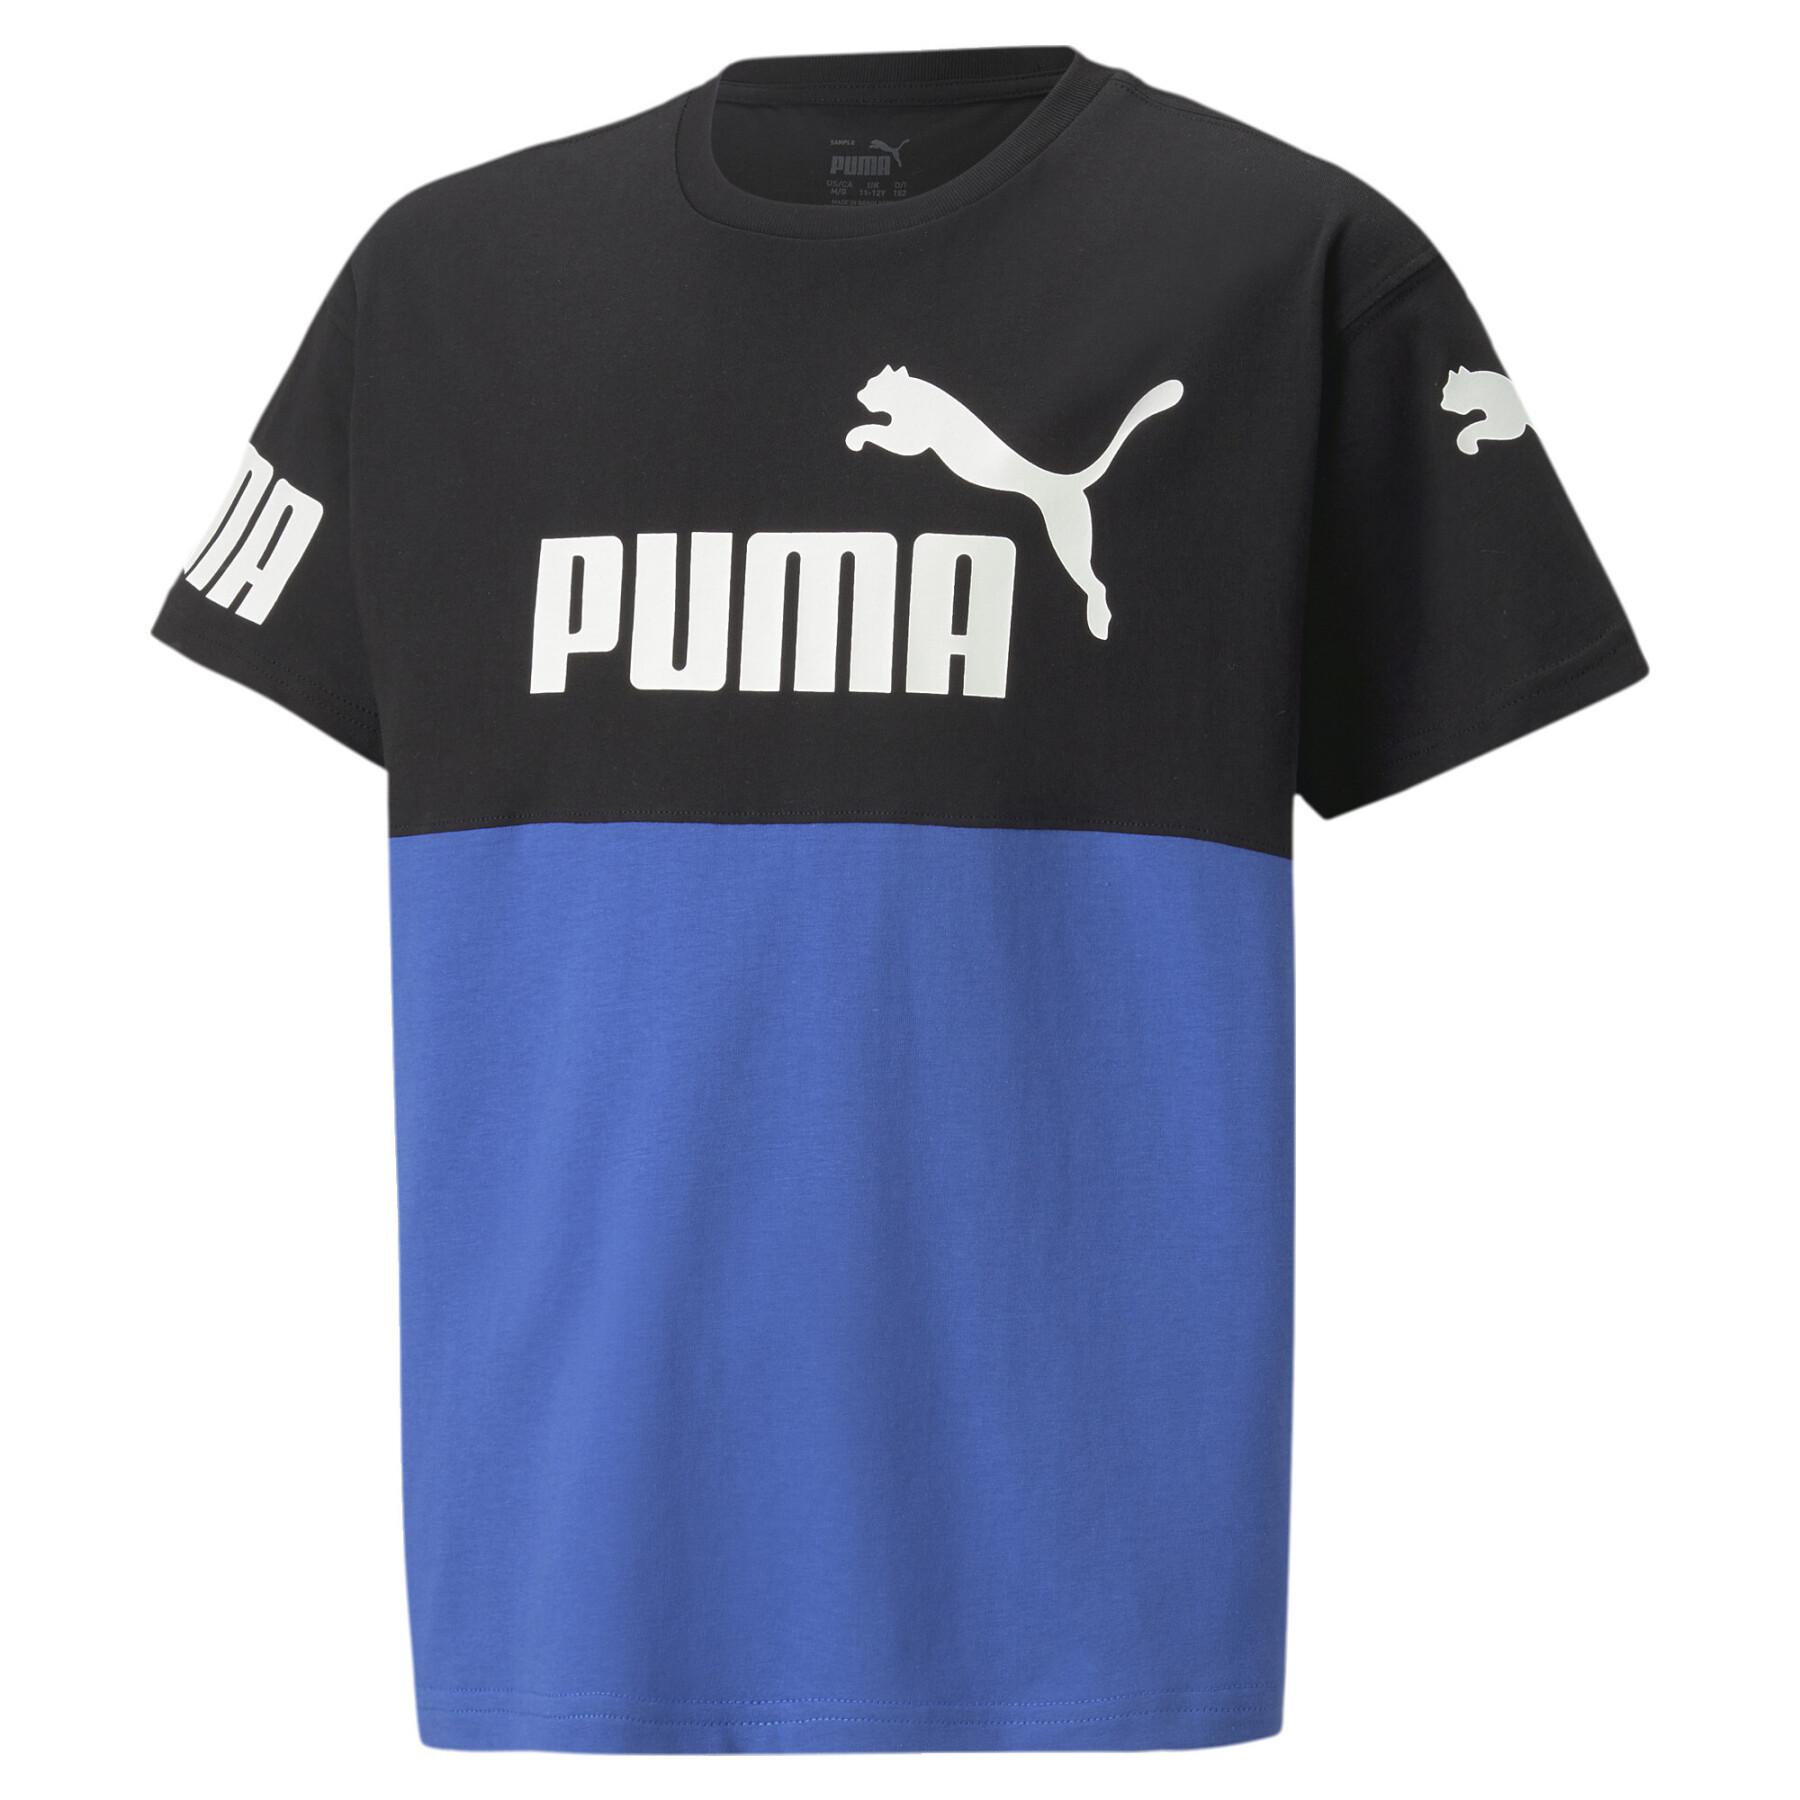 T-shirt enfant Puma Power